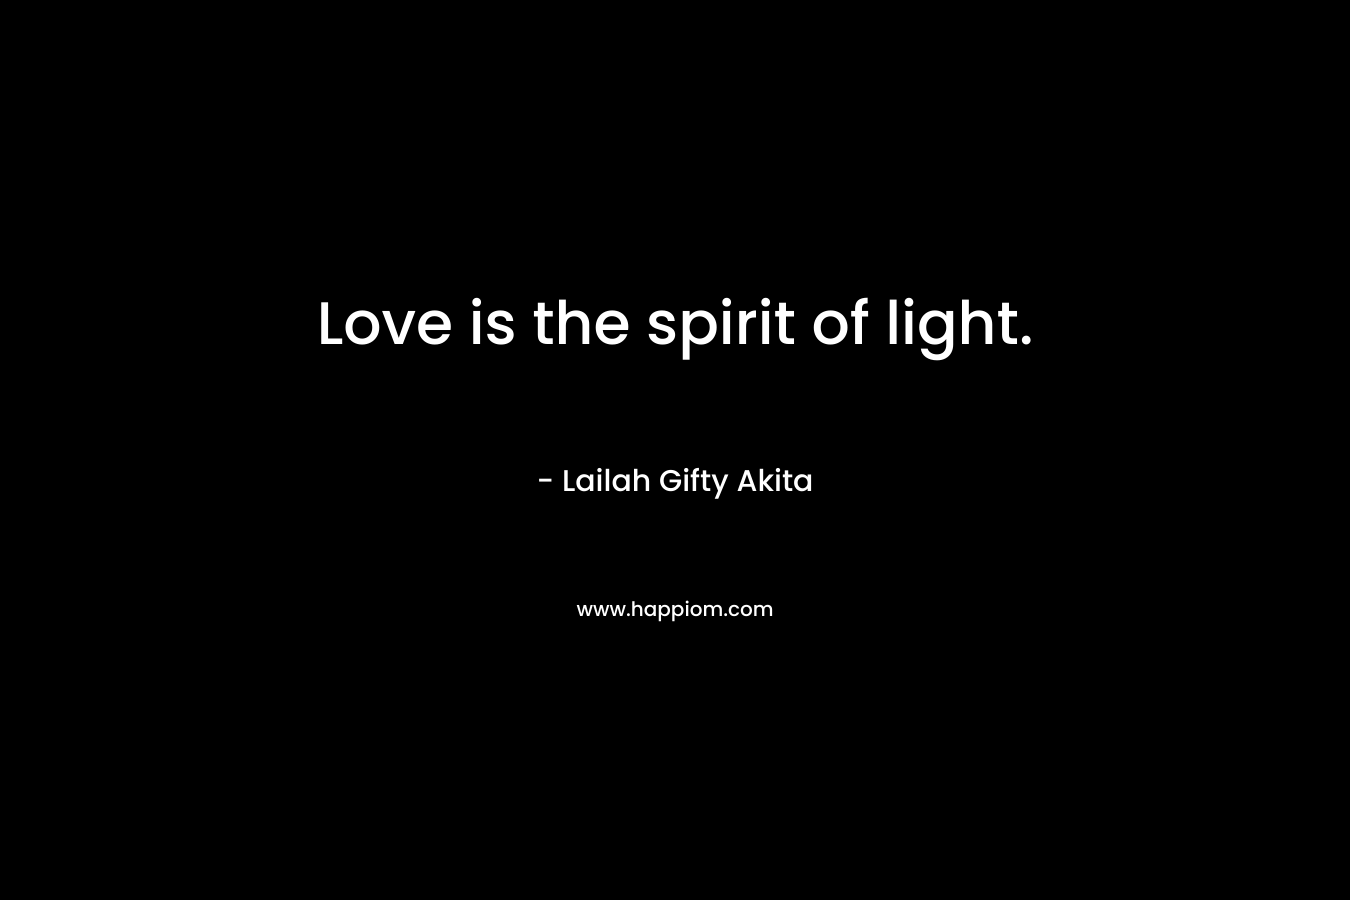 Love is the spirit of light.